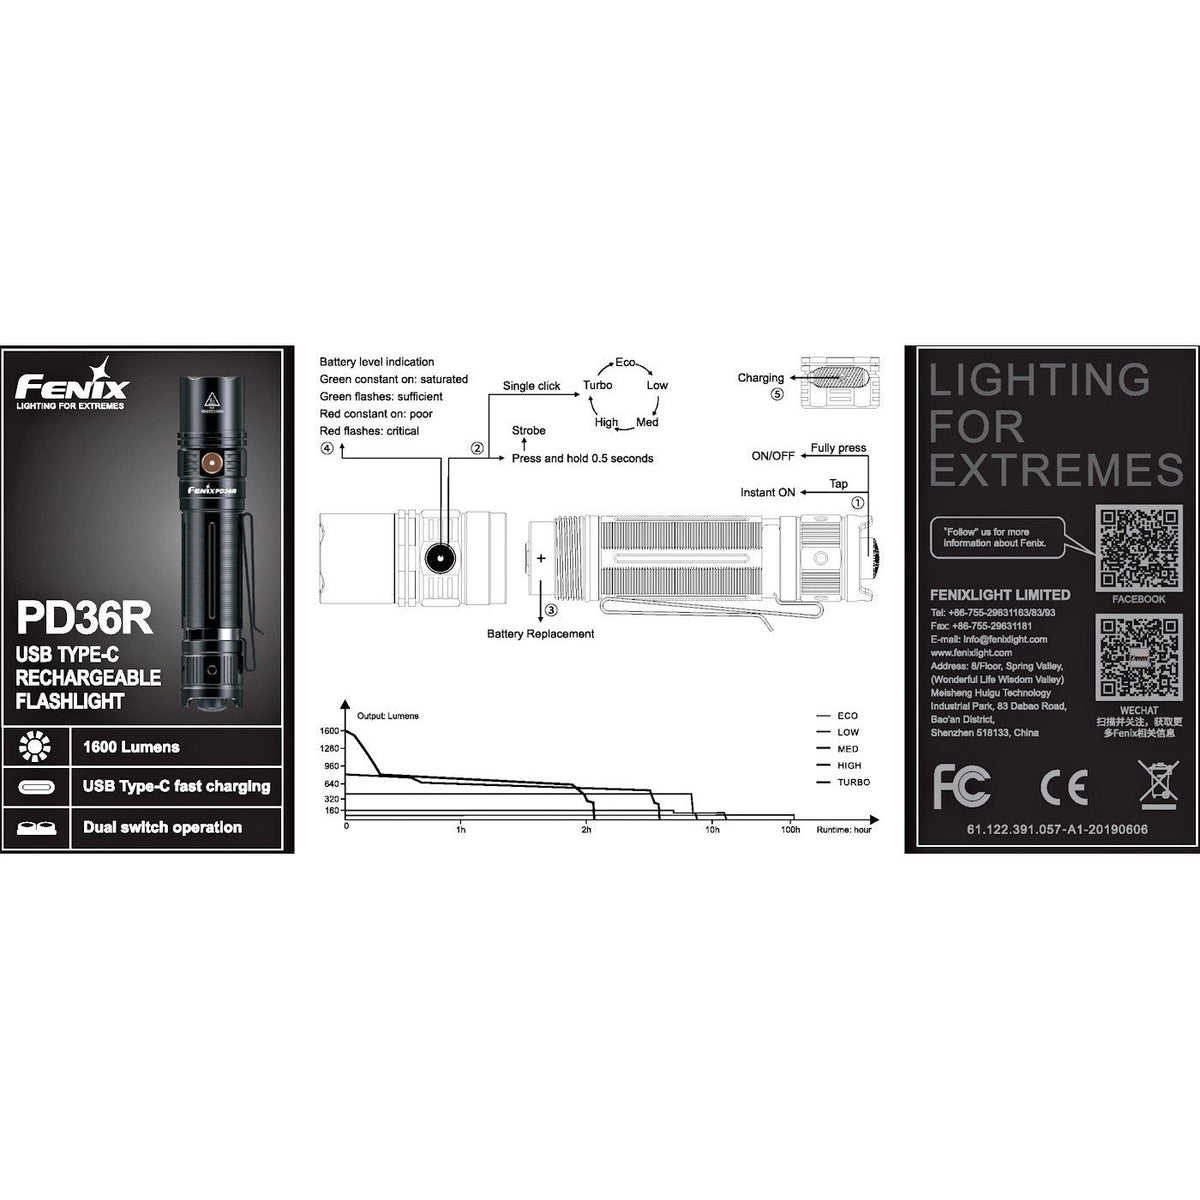 Fenix PD36R V2.0 USB-C Rechargeable Fashlight